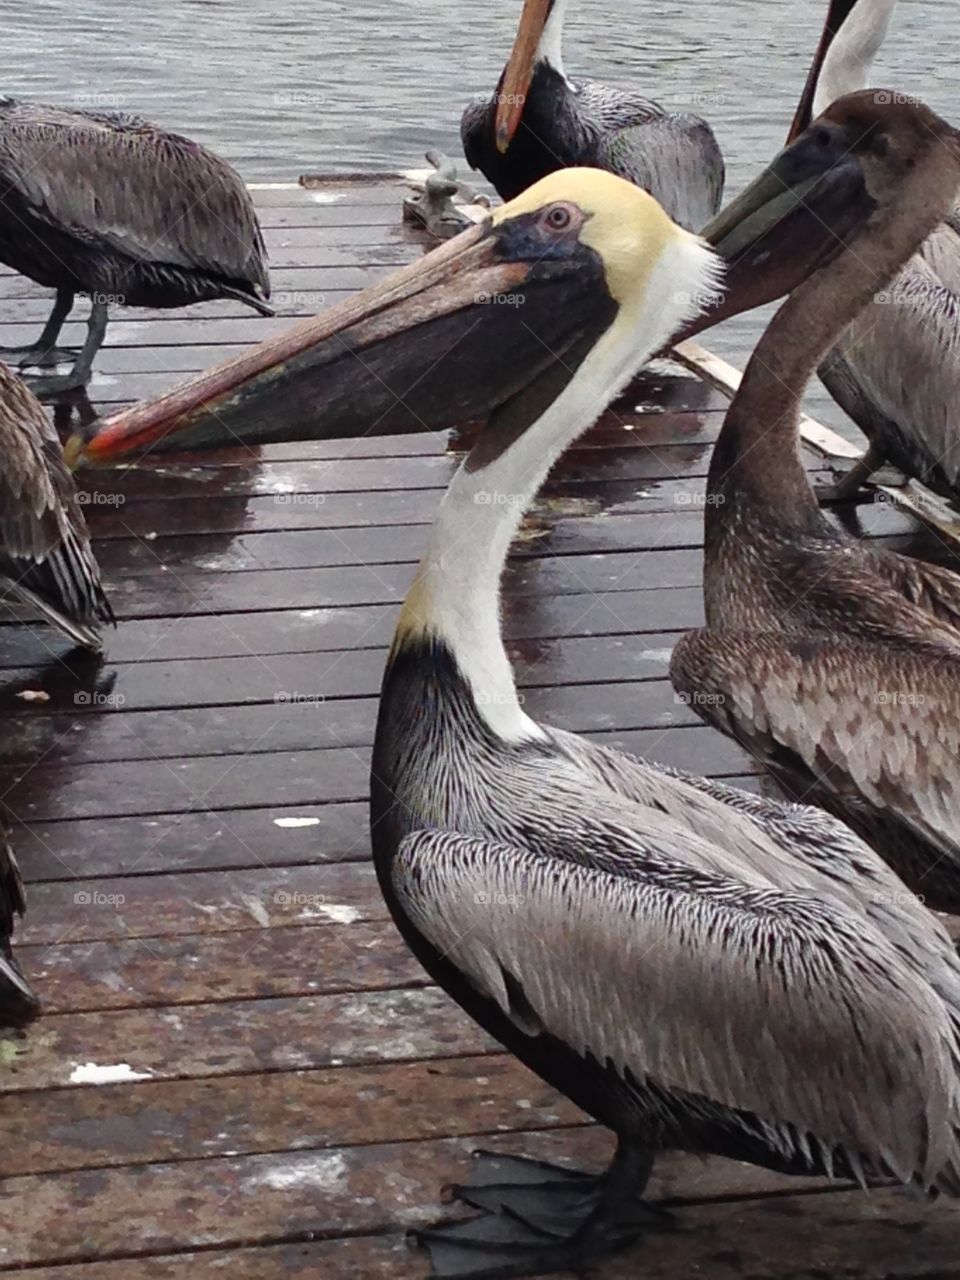 Pelican feast